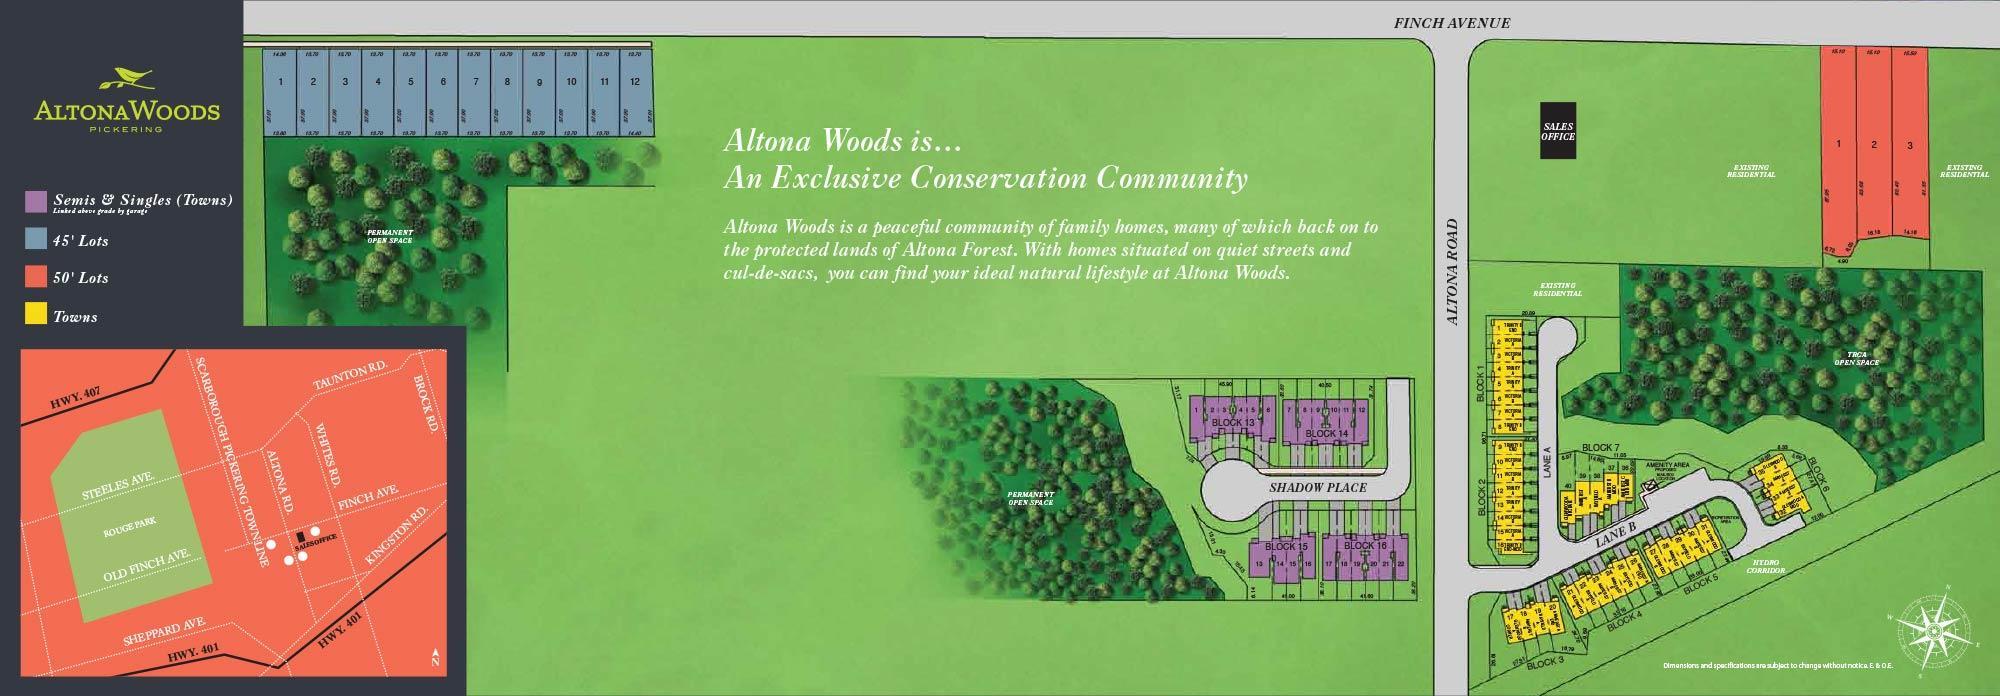 Altona Woods Site Plan